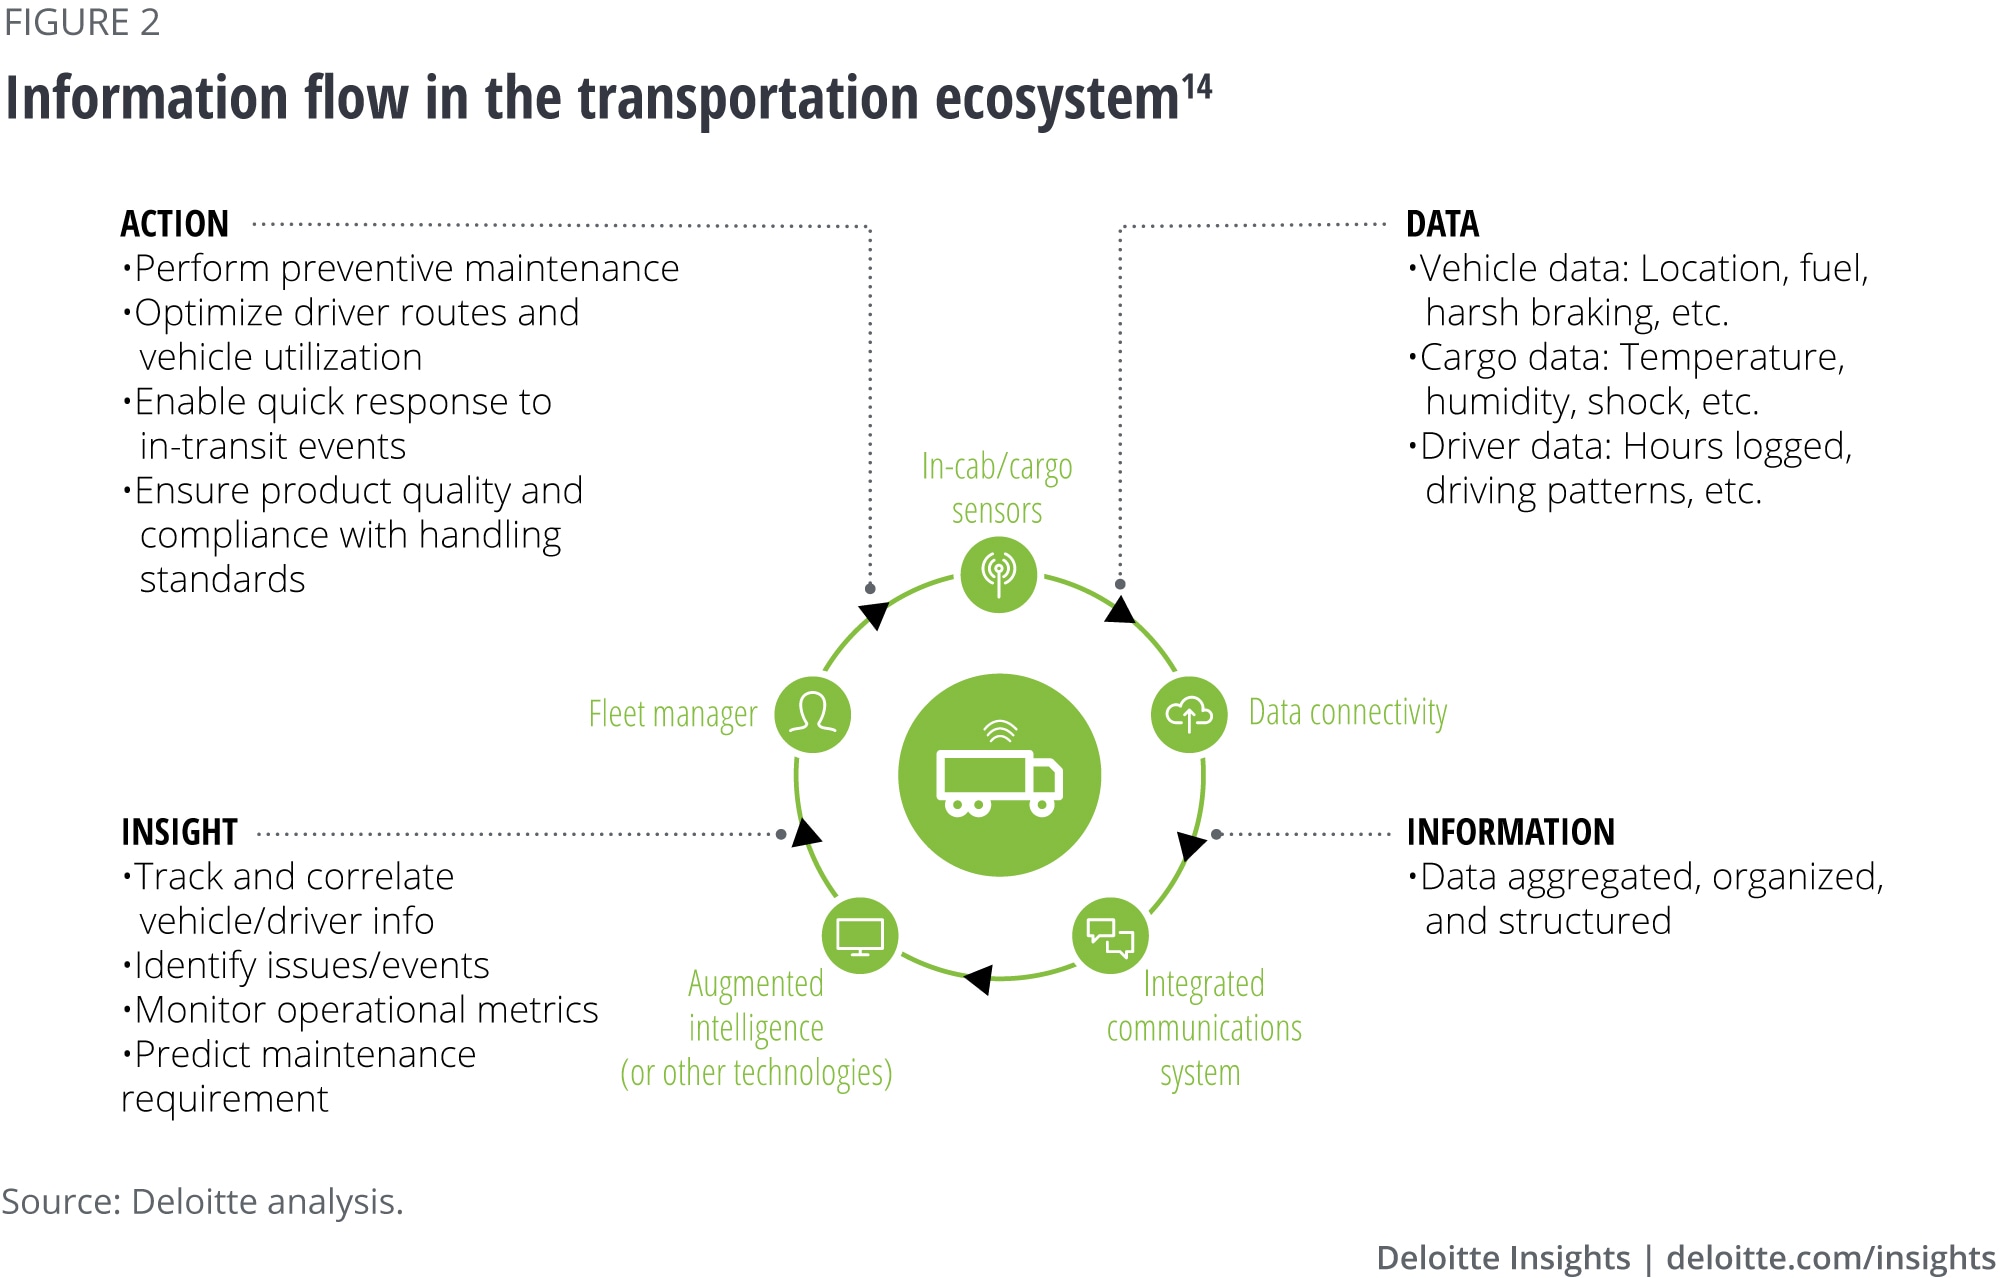 Information flow in the transportation ecosystem